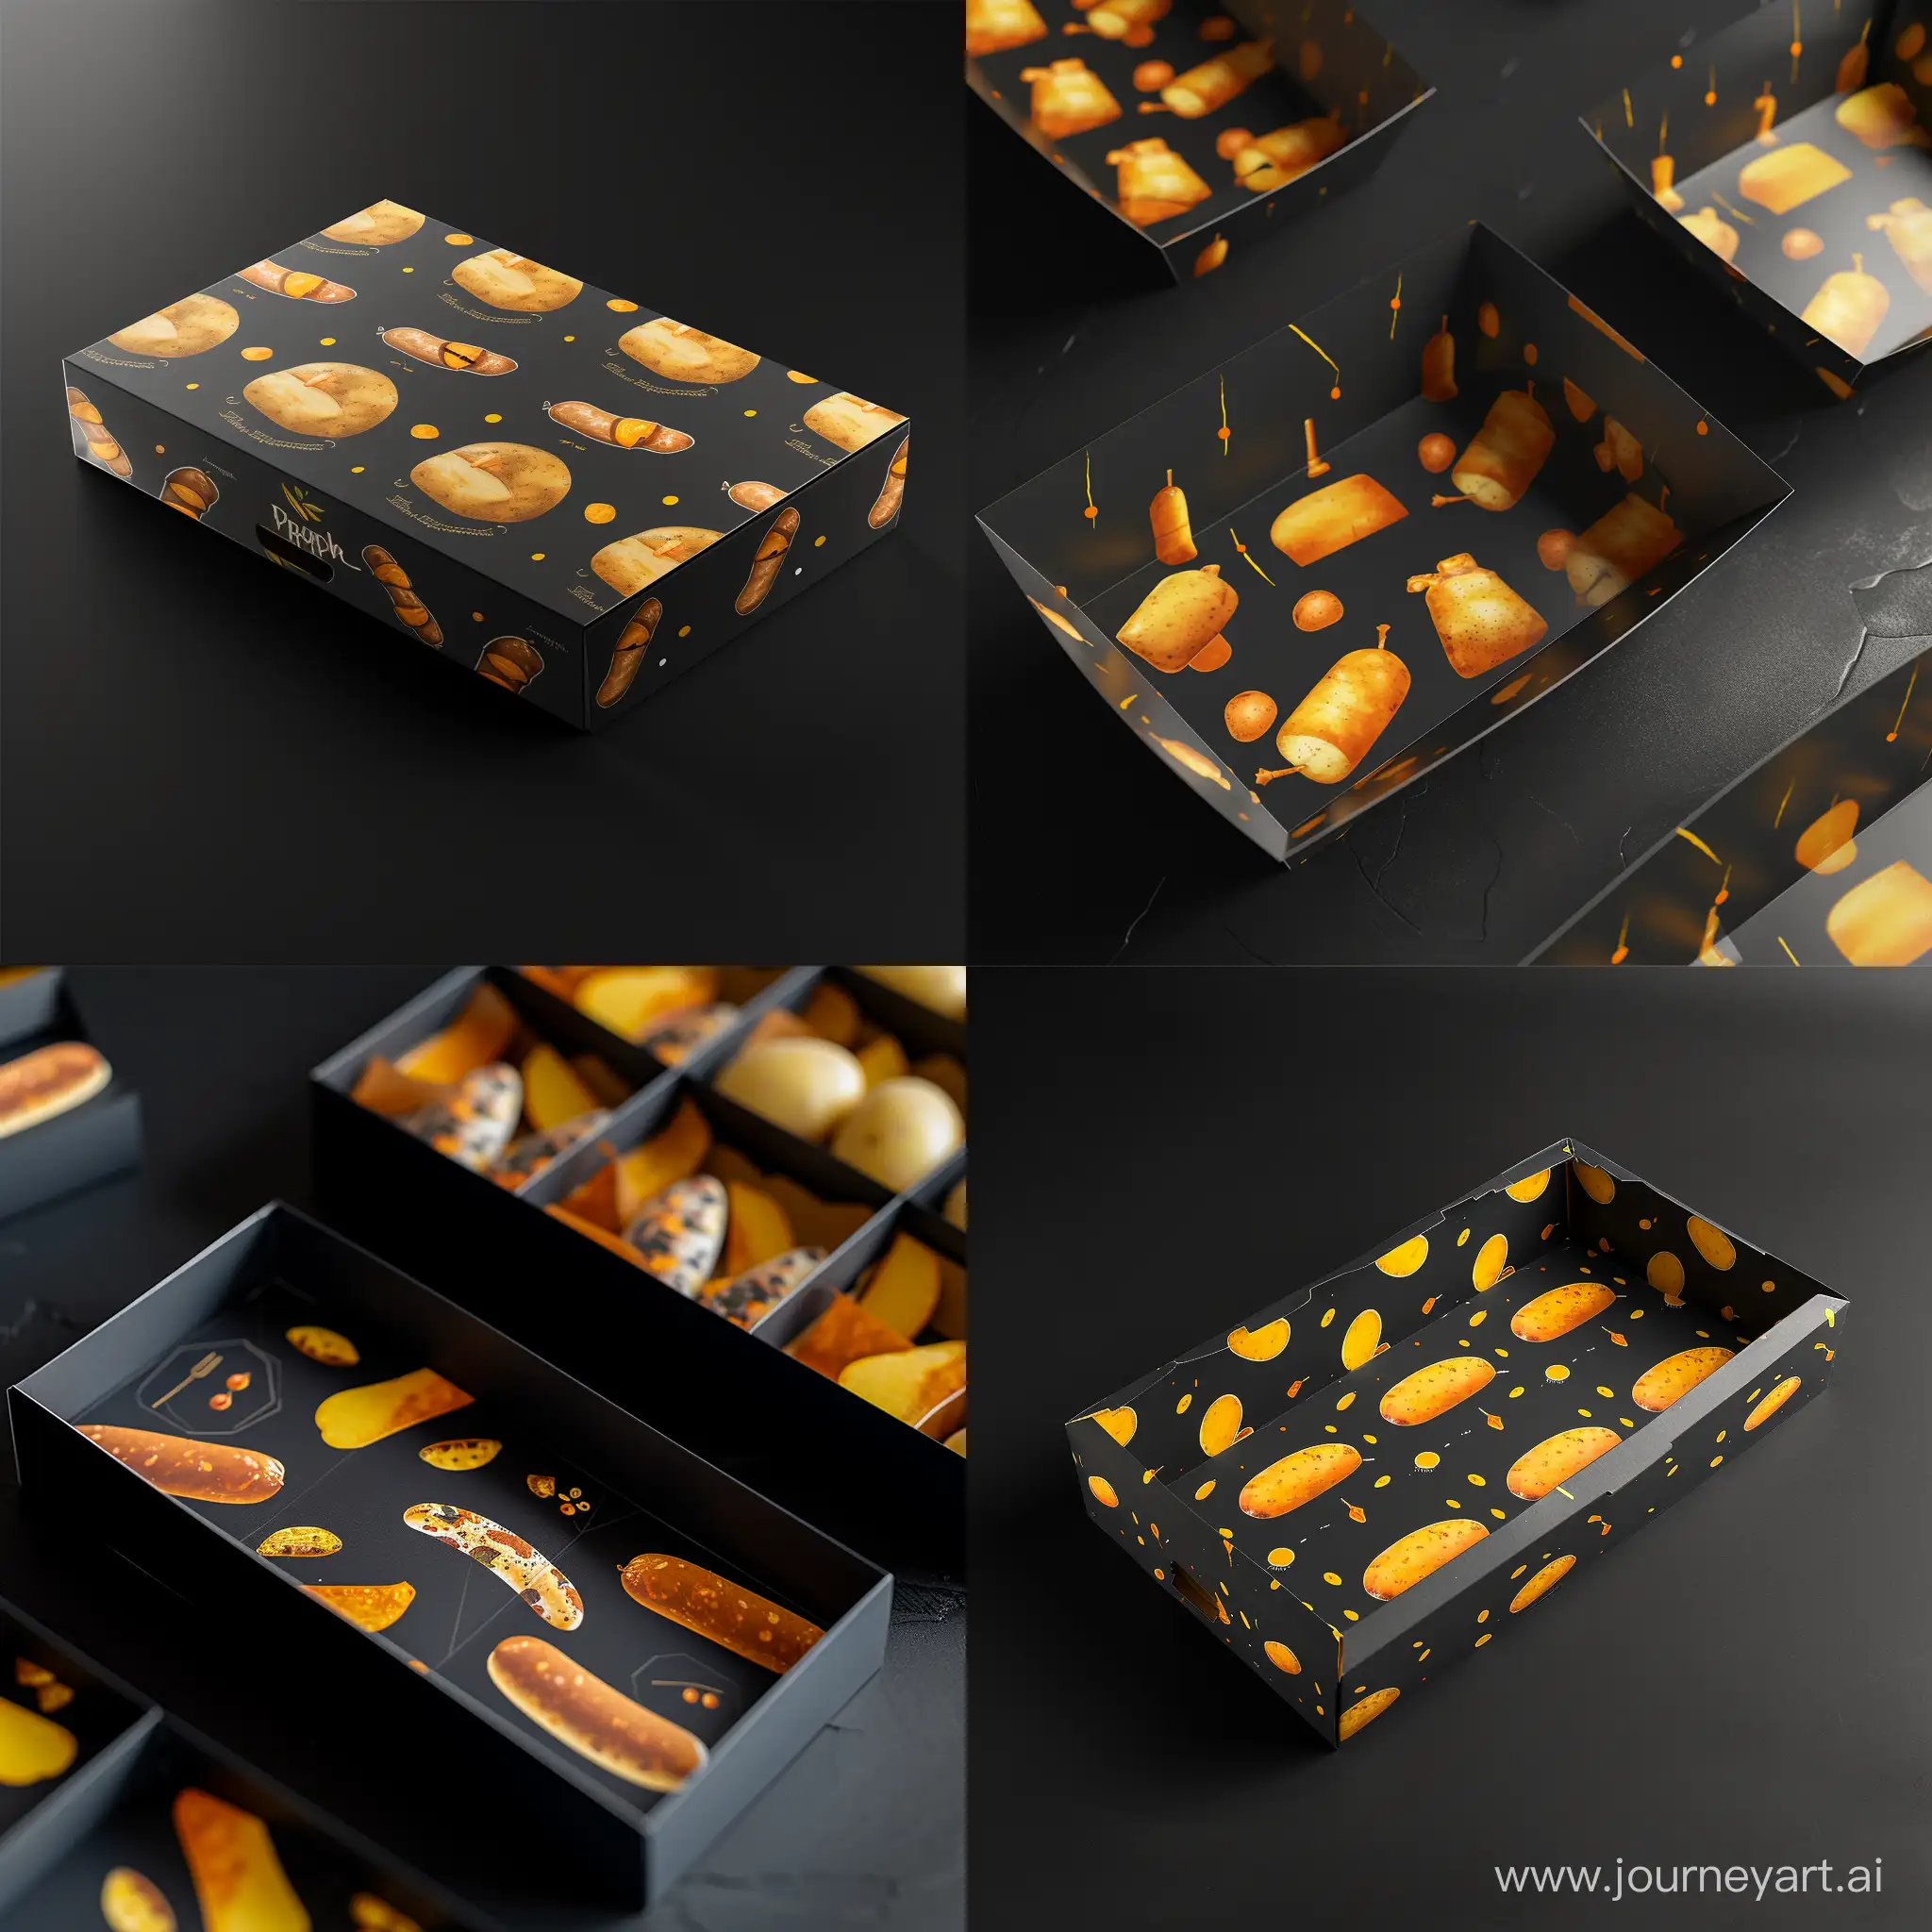 Artistic-Potato-Food-Box-Design-with-Vibrant-Sausage-and-Potato-Imagery-on-Matte-Black-Background